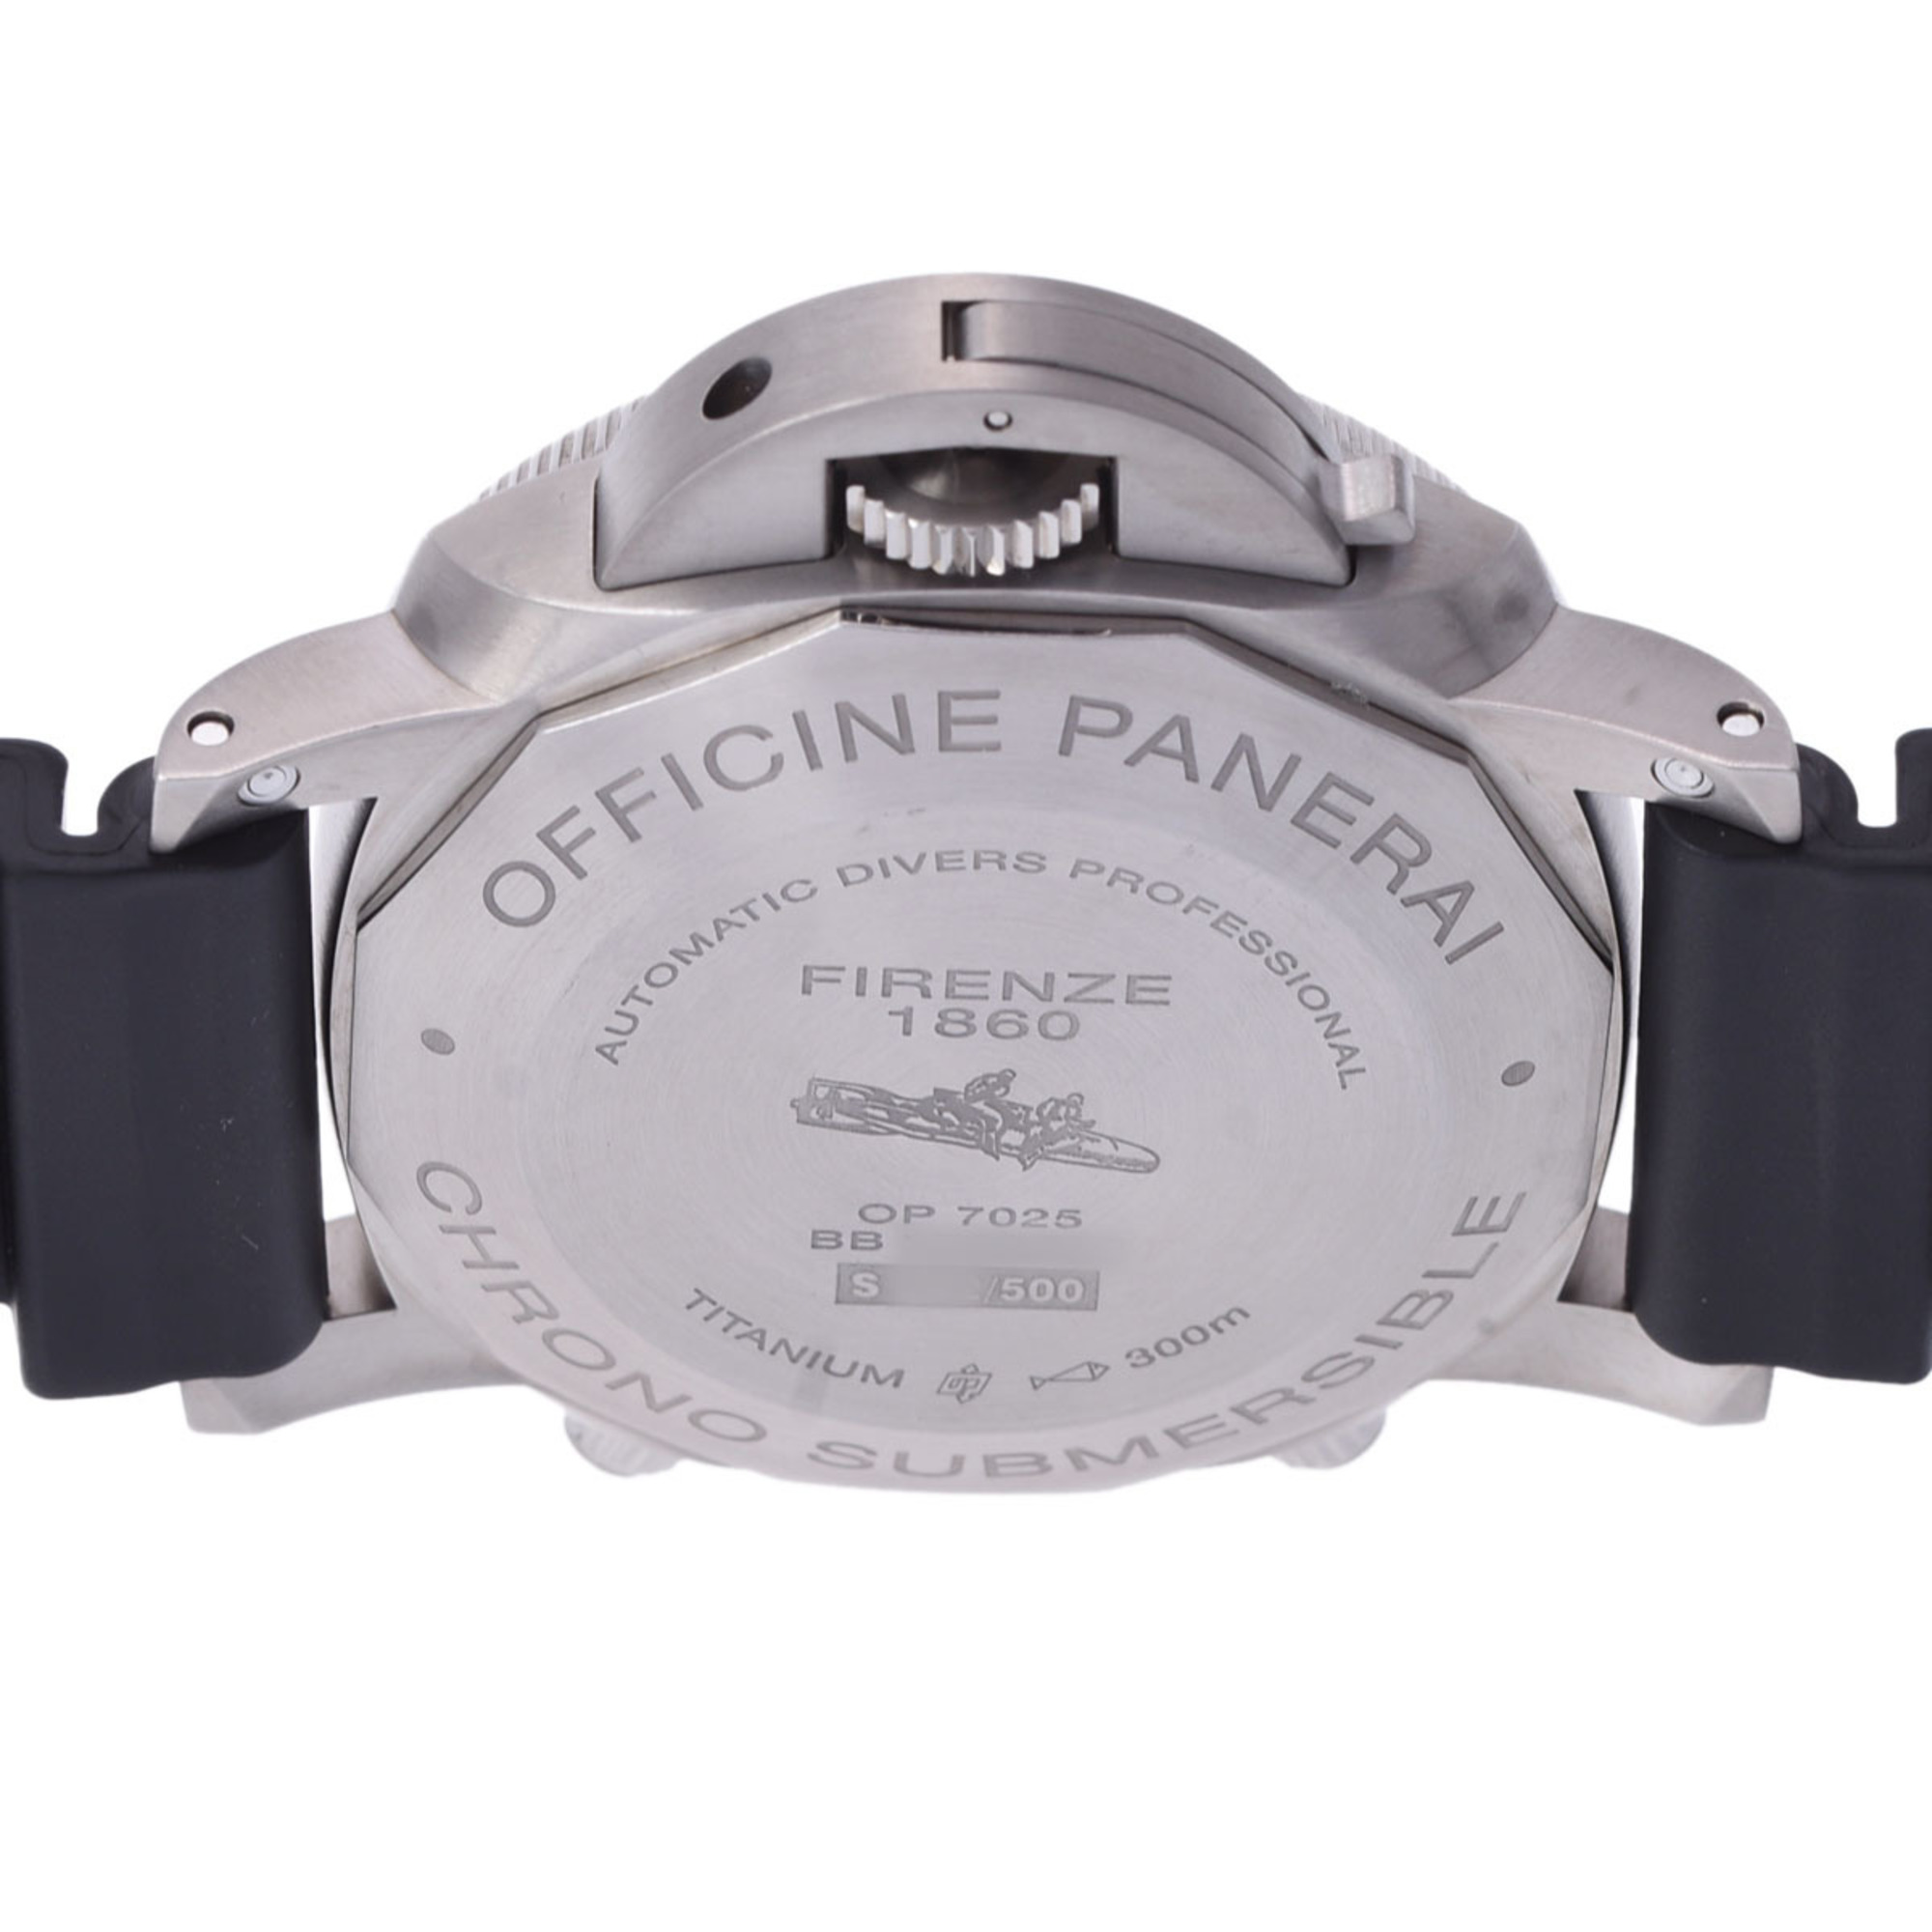 OFFICINE PANERAI Luminor 1950 Submersible 3days PAM00615 Men's Titanium/Rubber Watch Automatic Winding Black Dial